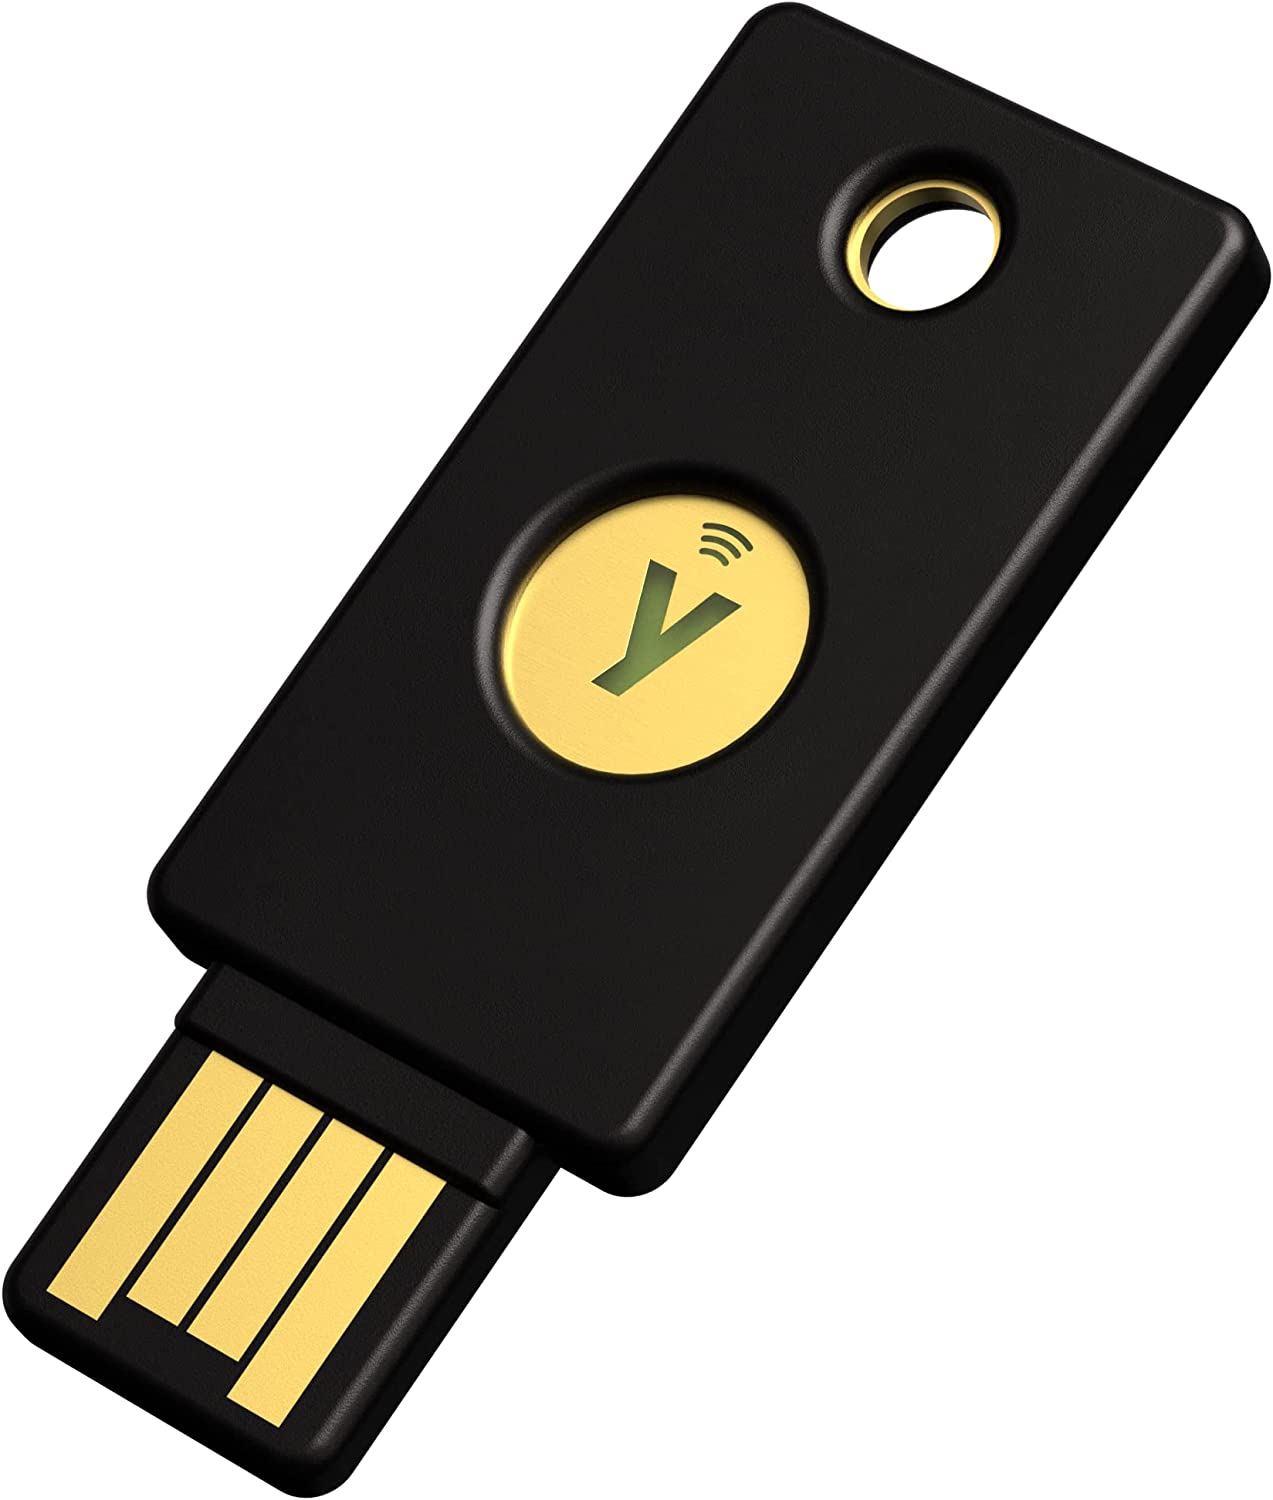 Yubico - YubiKey 5 NFC - USB-A - Two Factor Authentication Security Key - Black